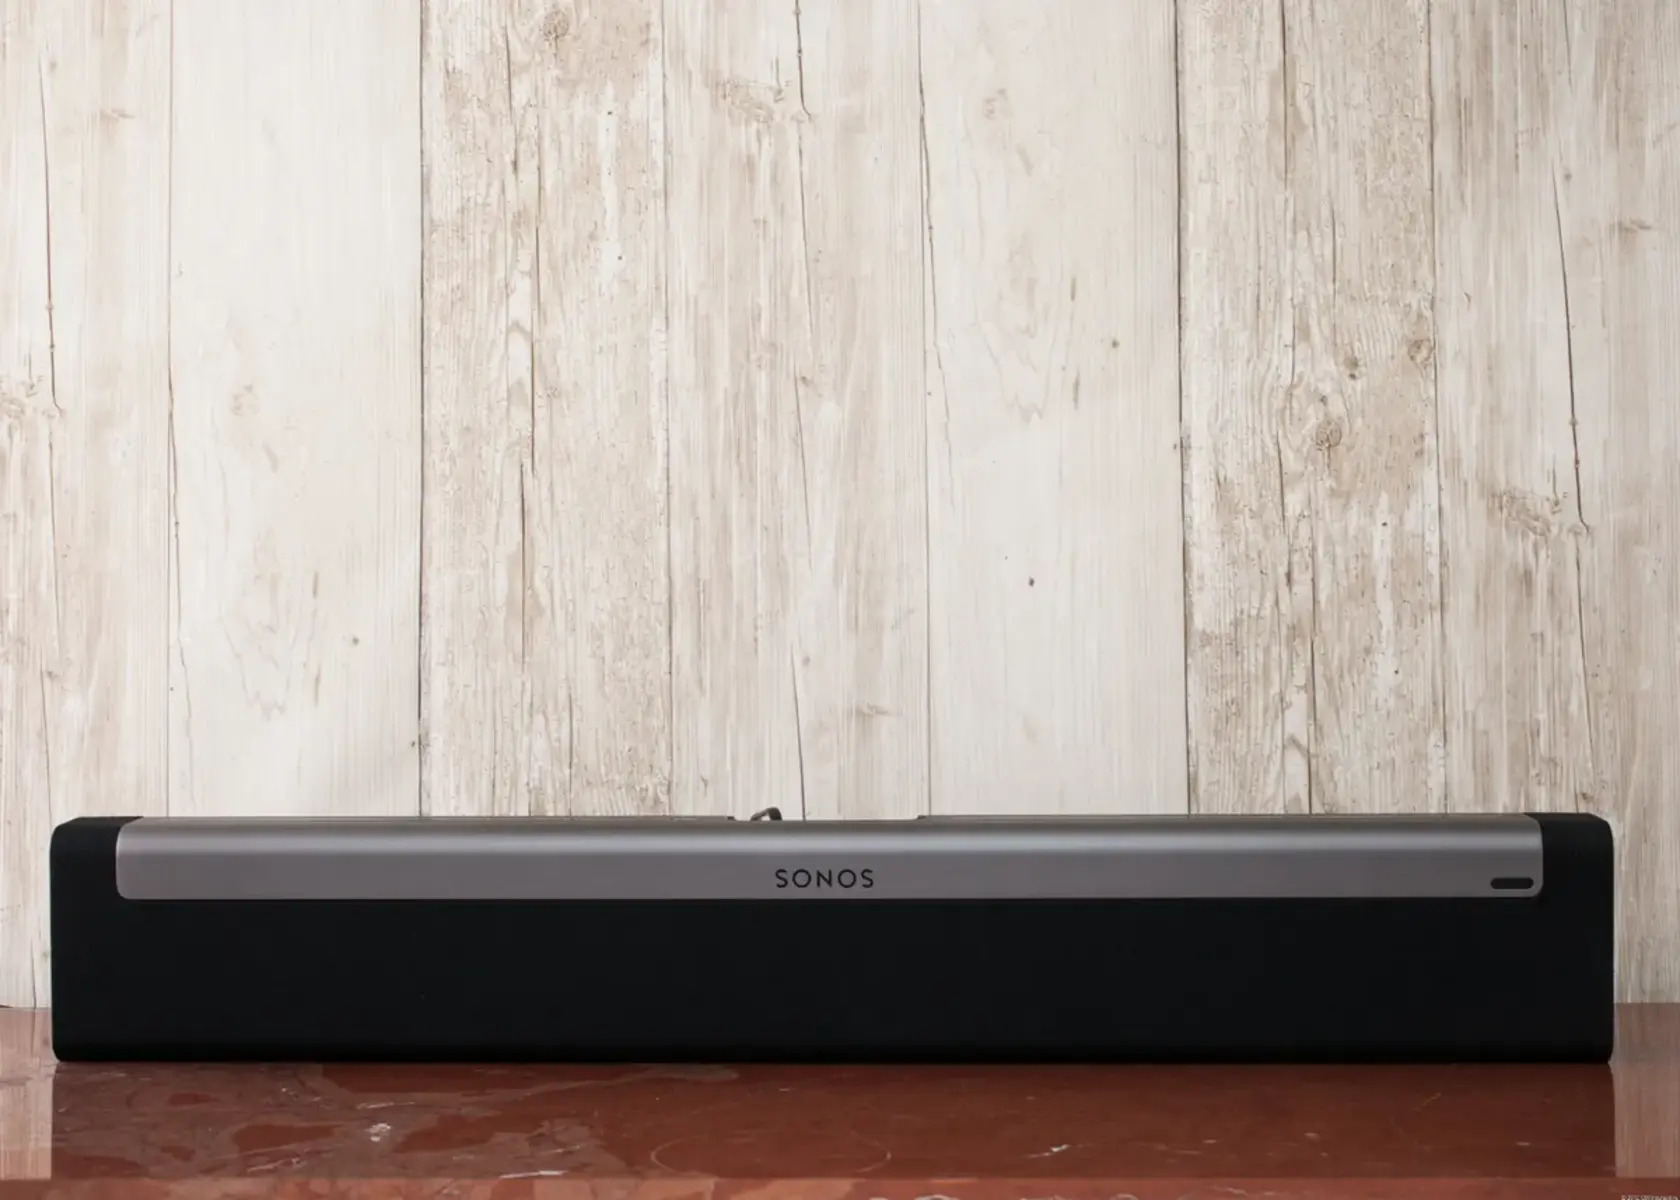 Sonos Playbar Review: A Premium, Feature-Rich Soundbar